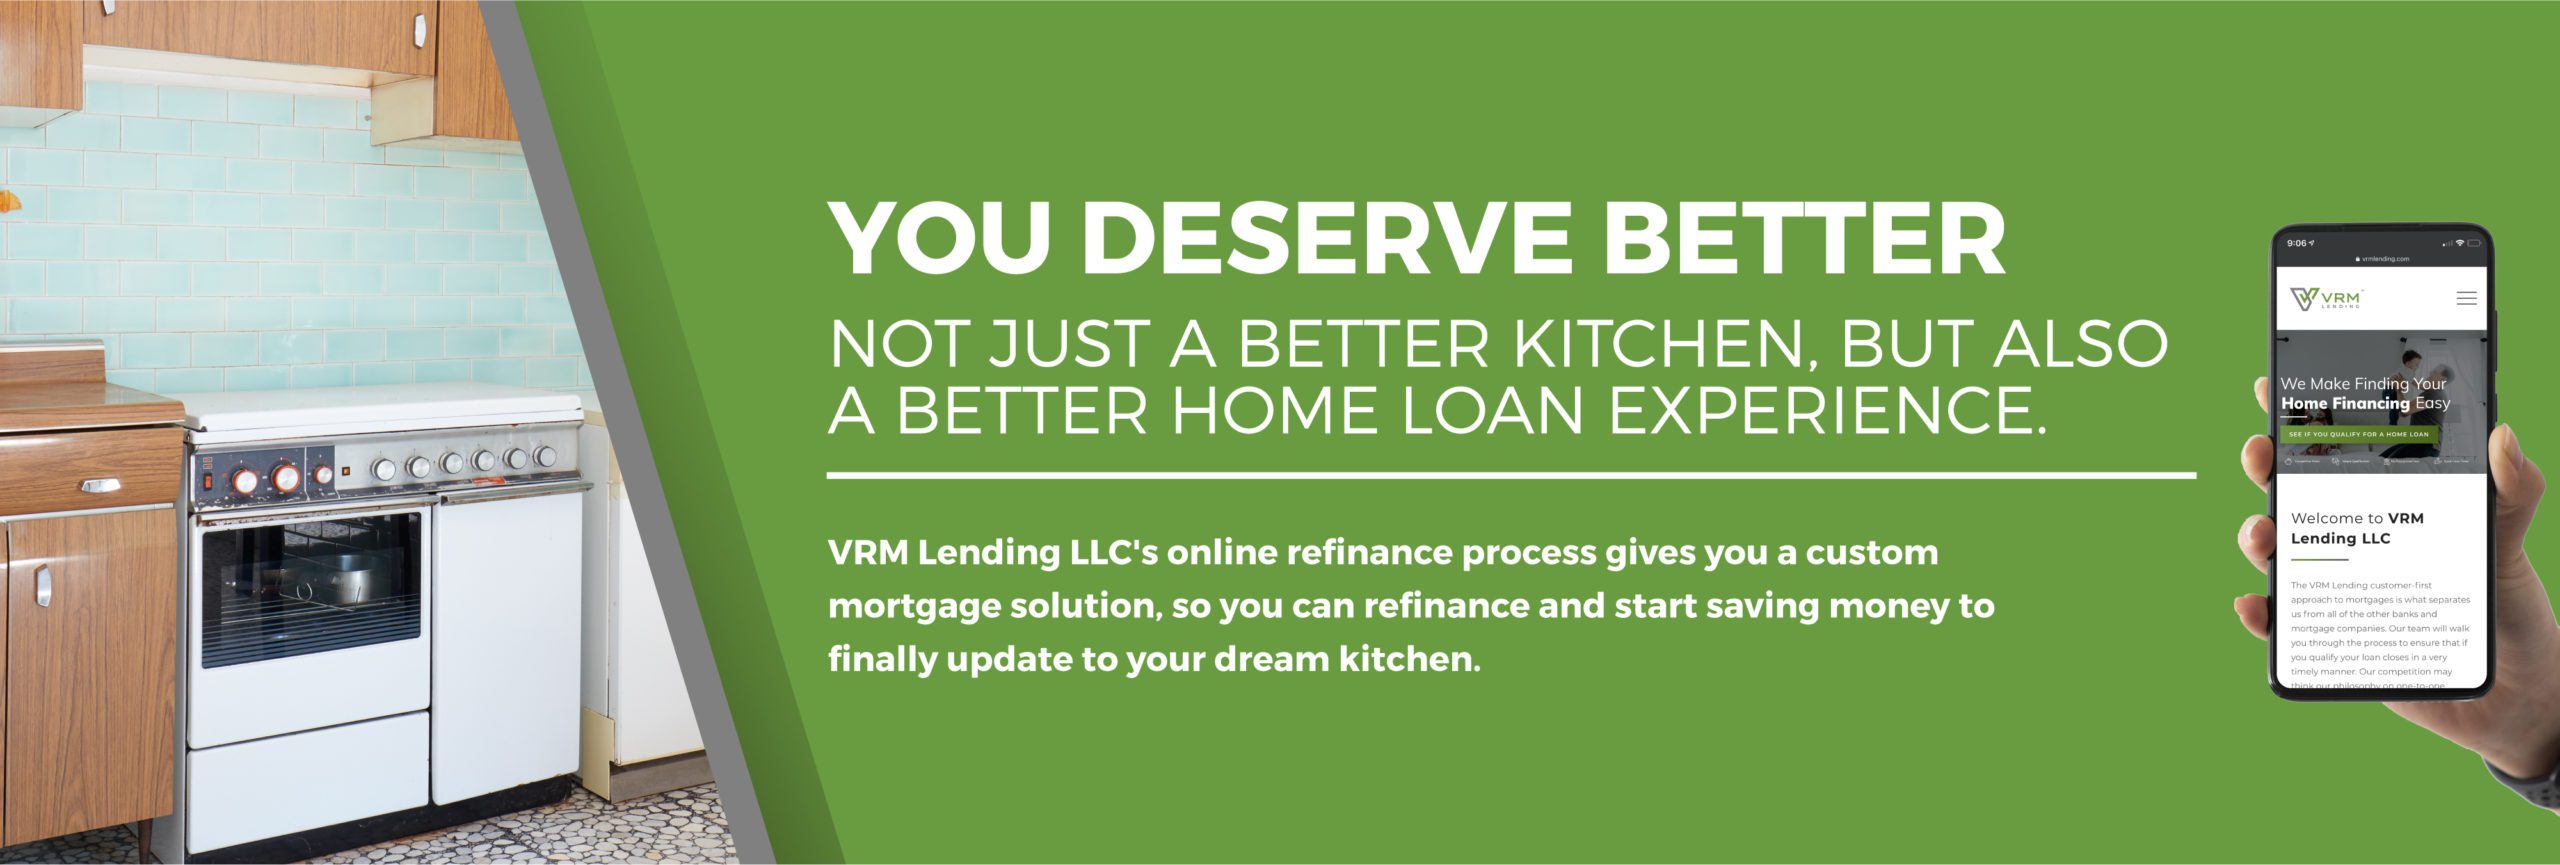 VRM Lending LLC Refinance